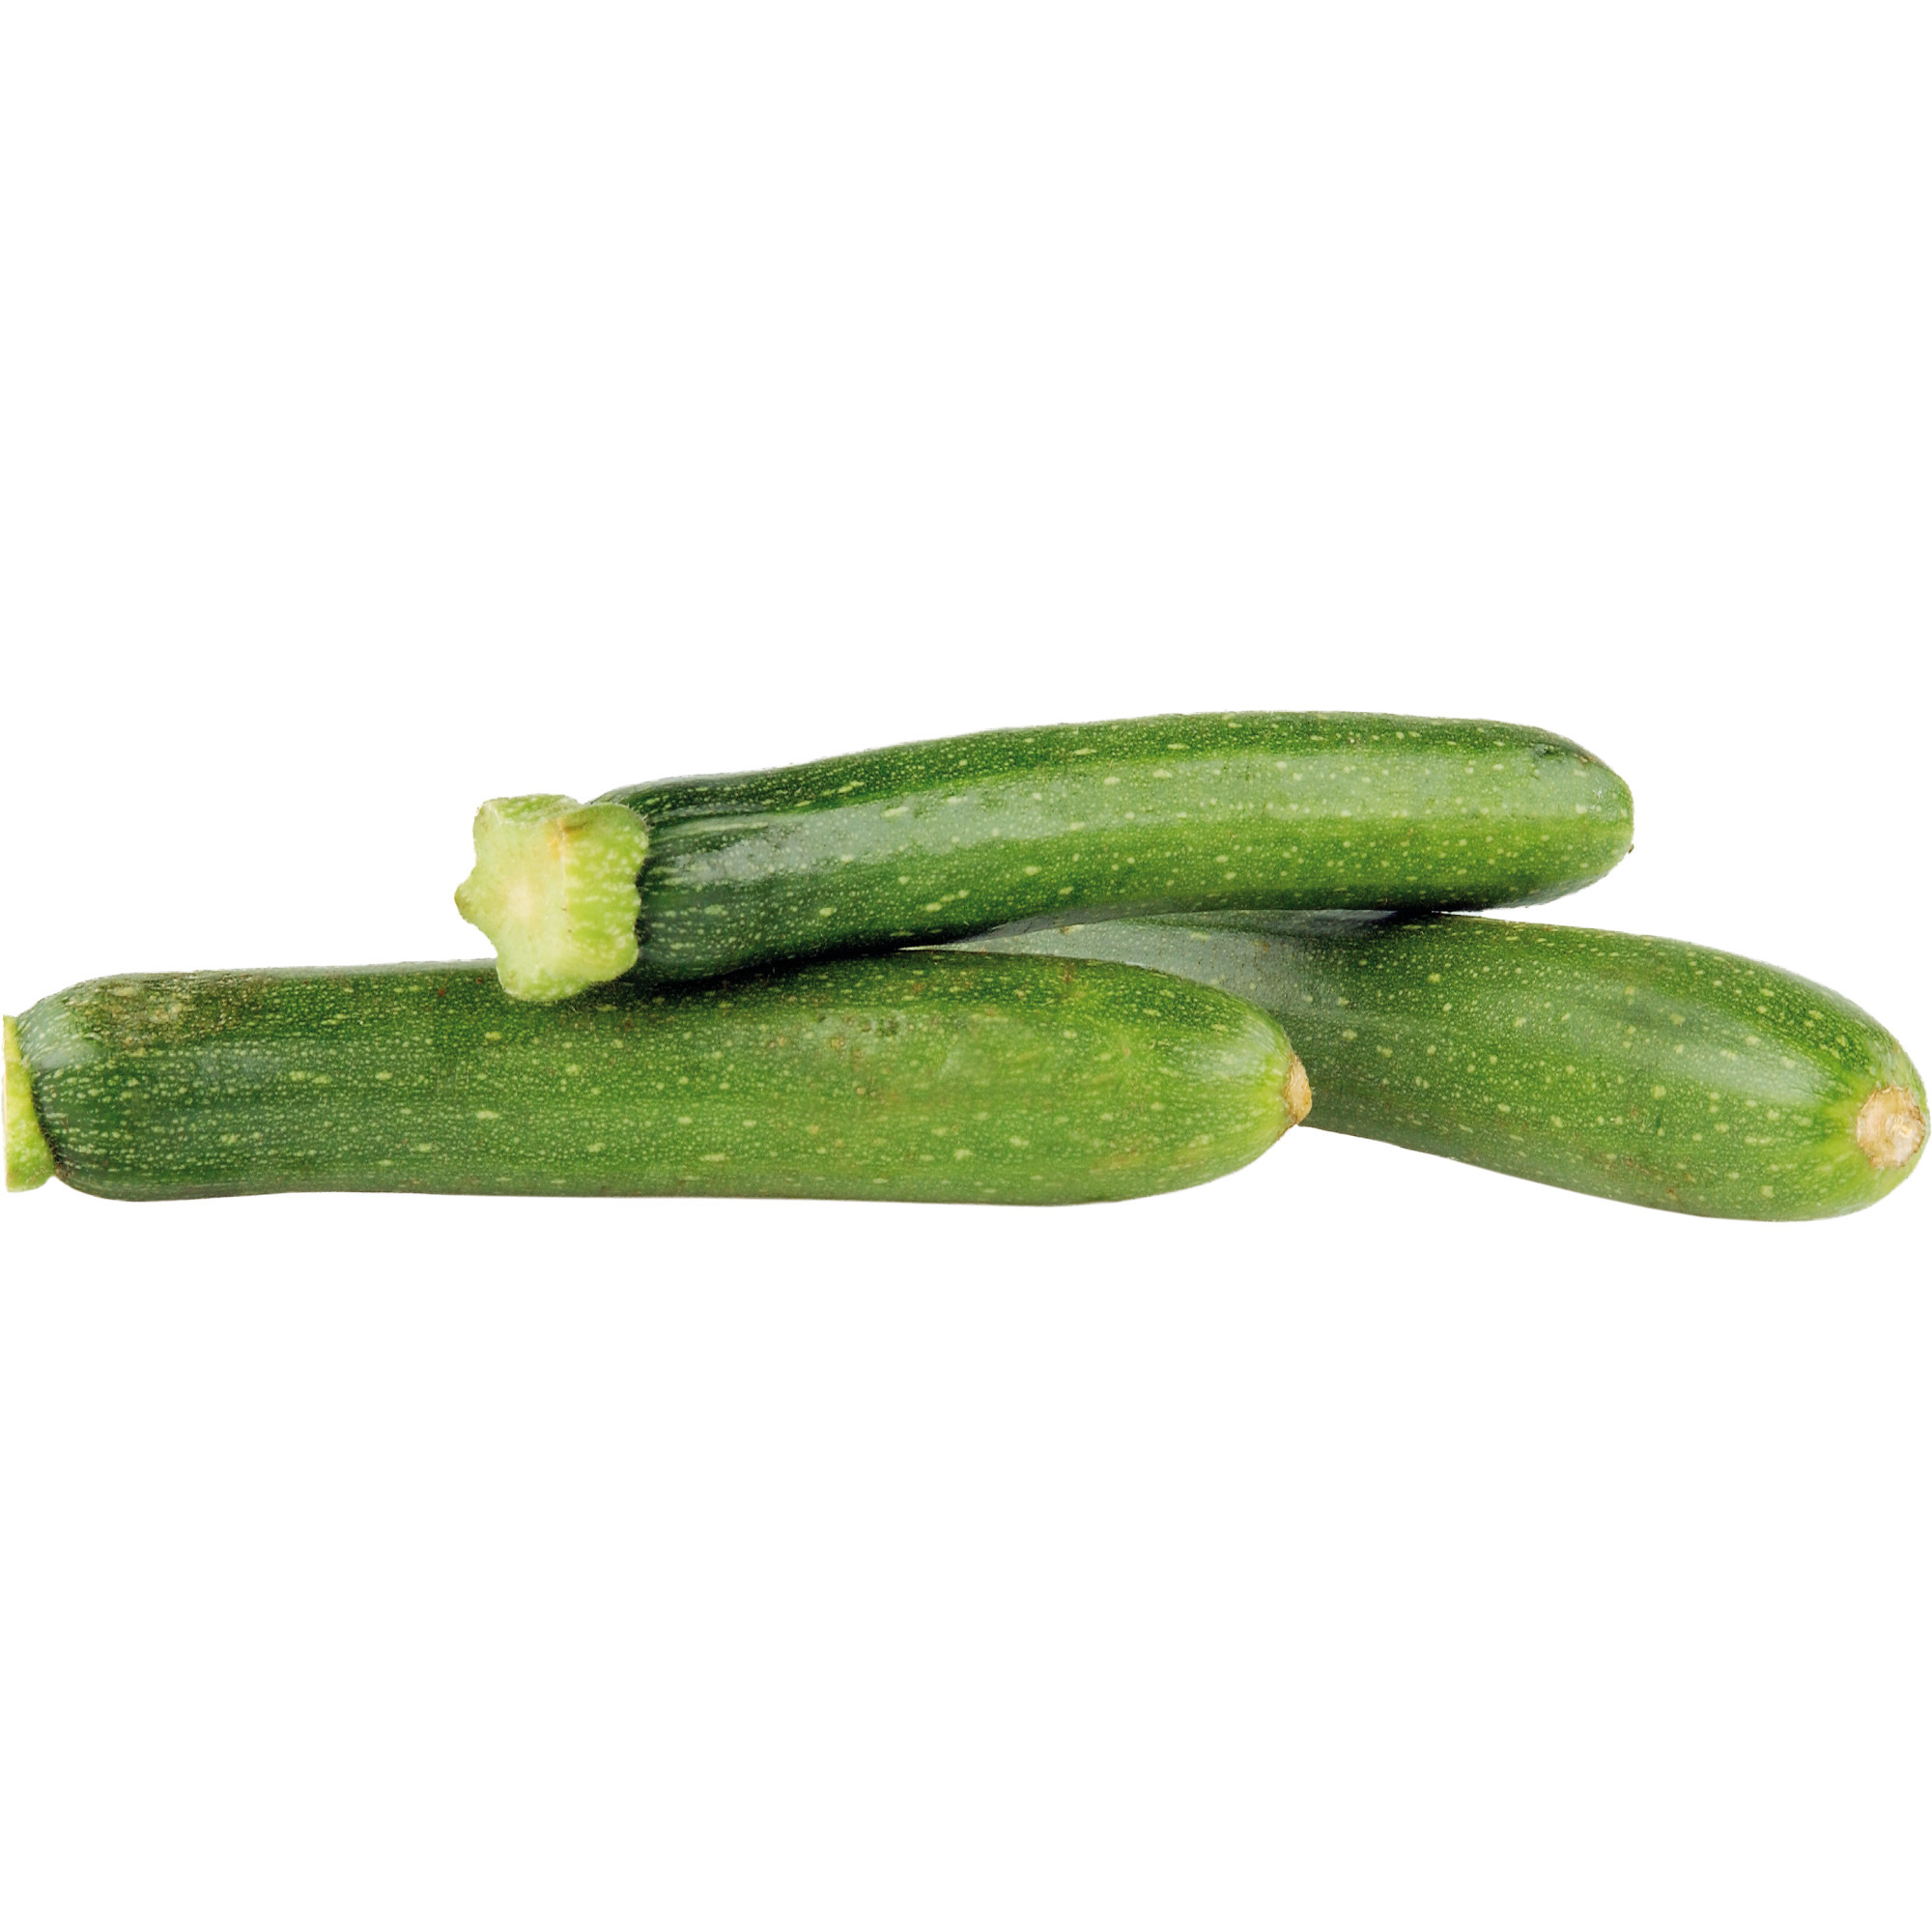 Baby Zucchini grün KL.1       200g